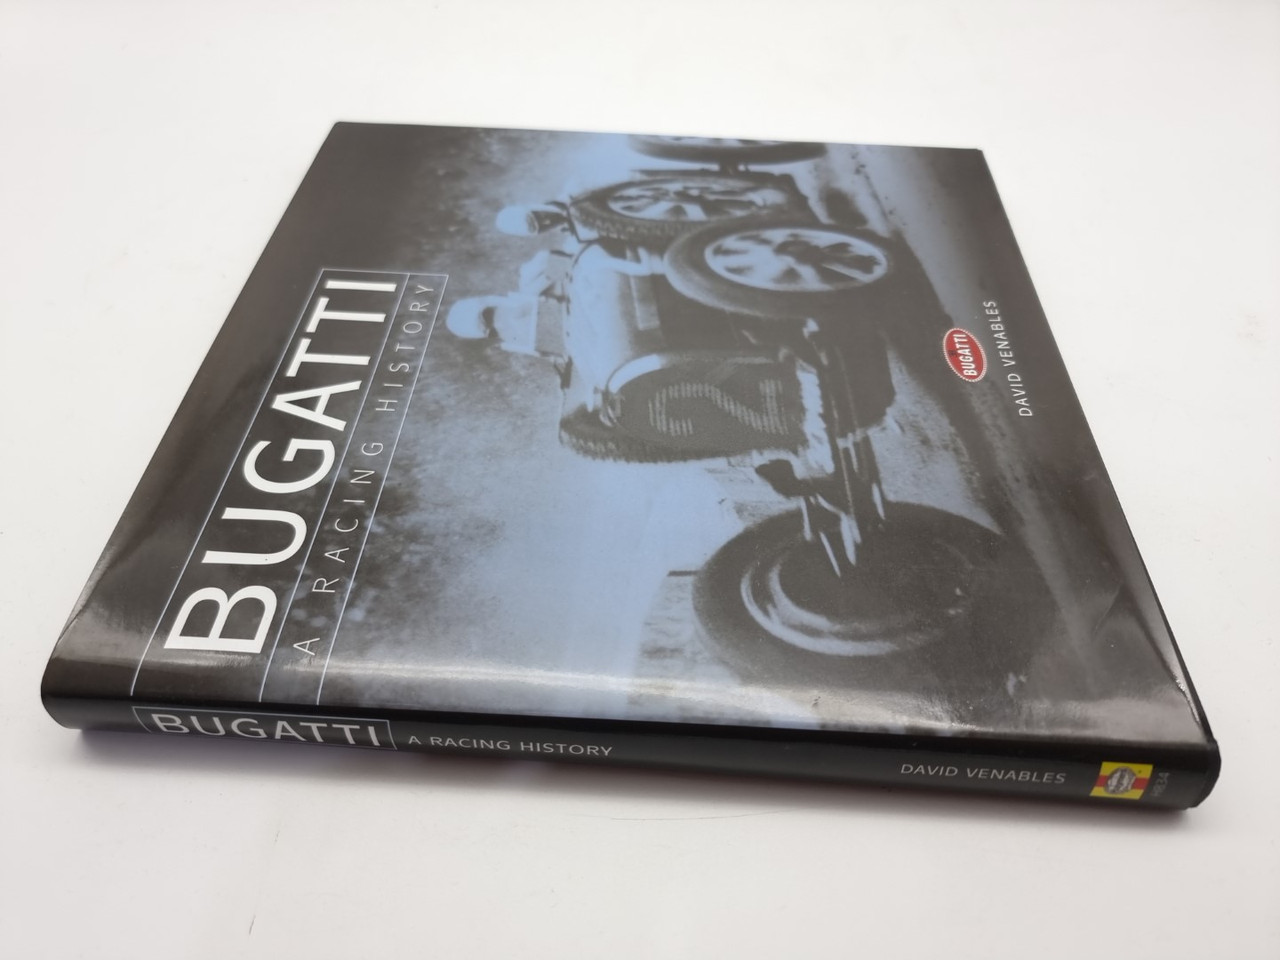 Bugatti A Racing History (David Venables, 2002)